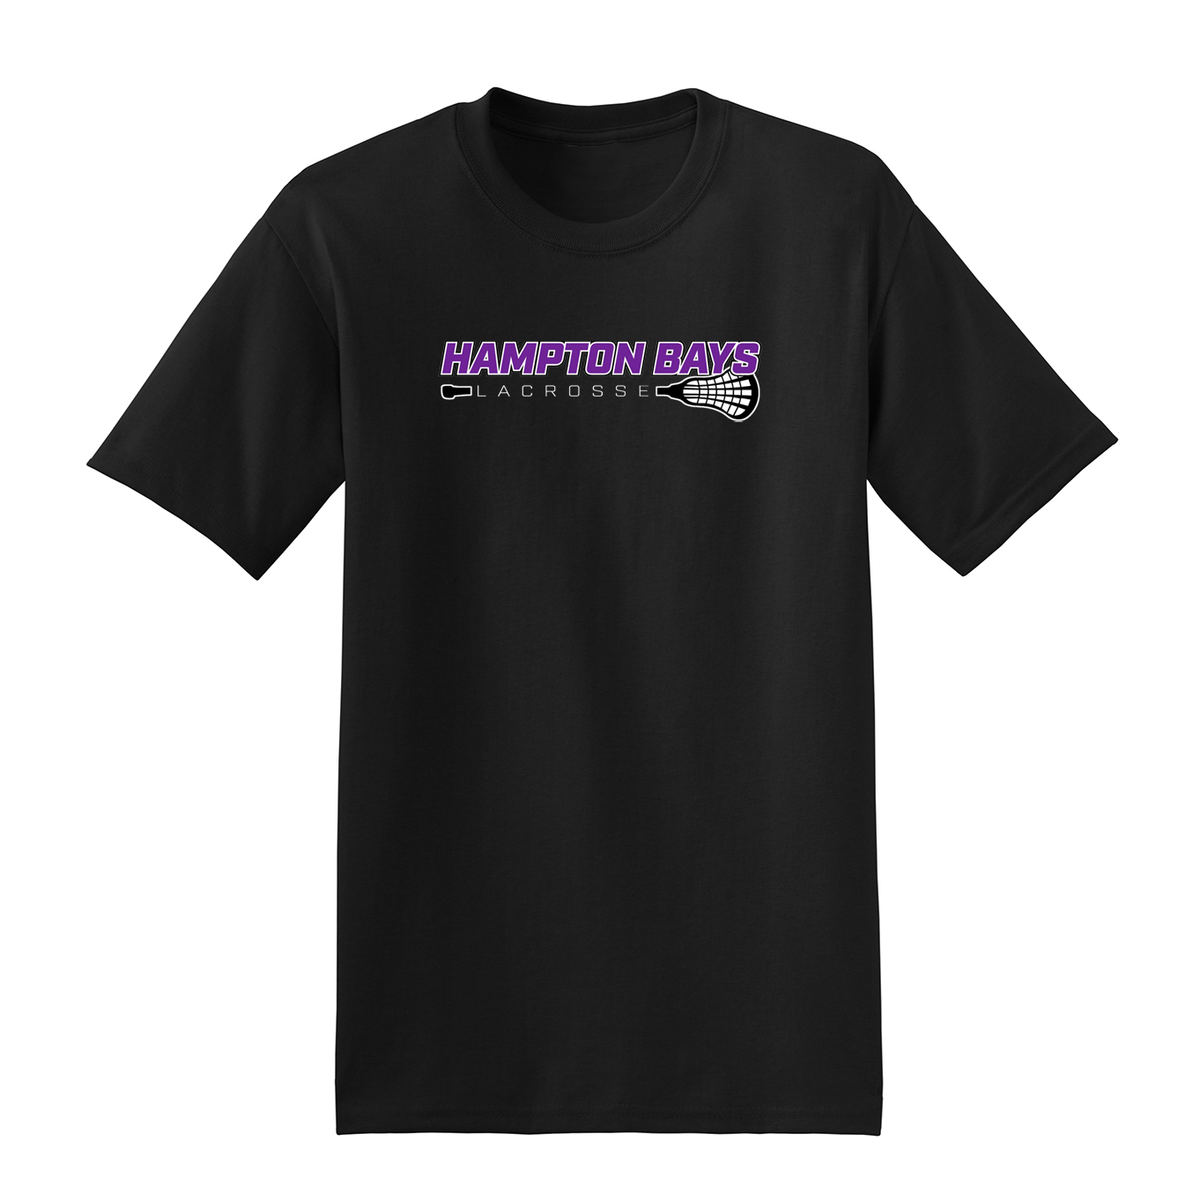 Hampton Bays Lacrosse T-Shirt